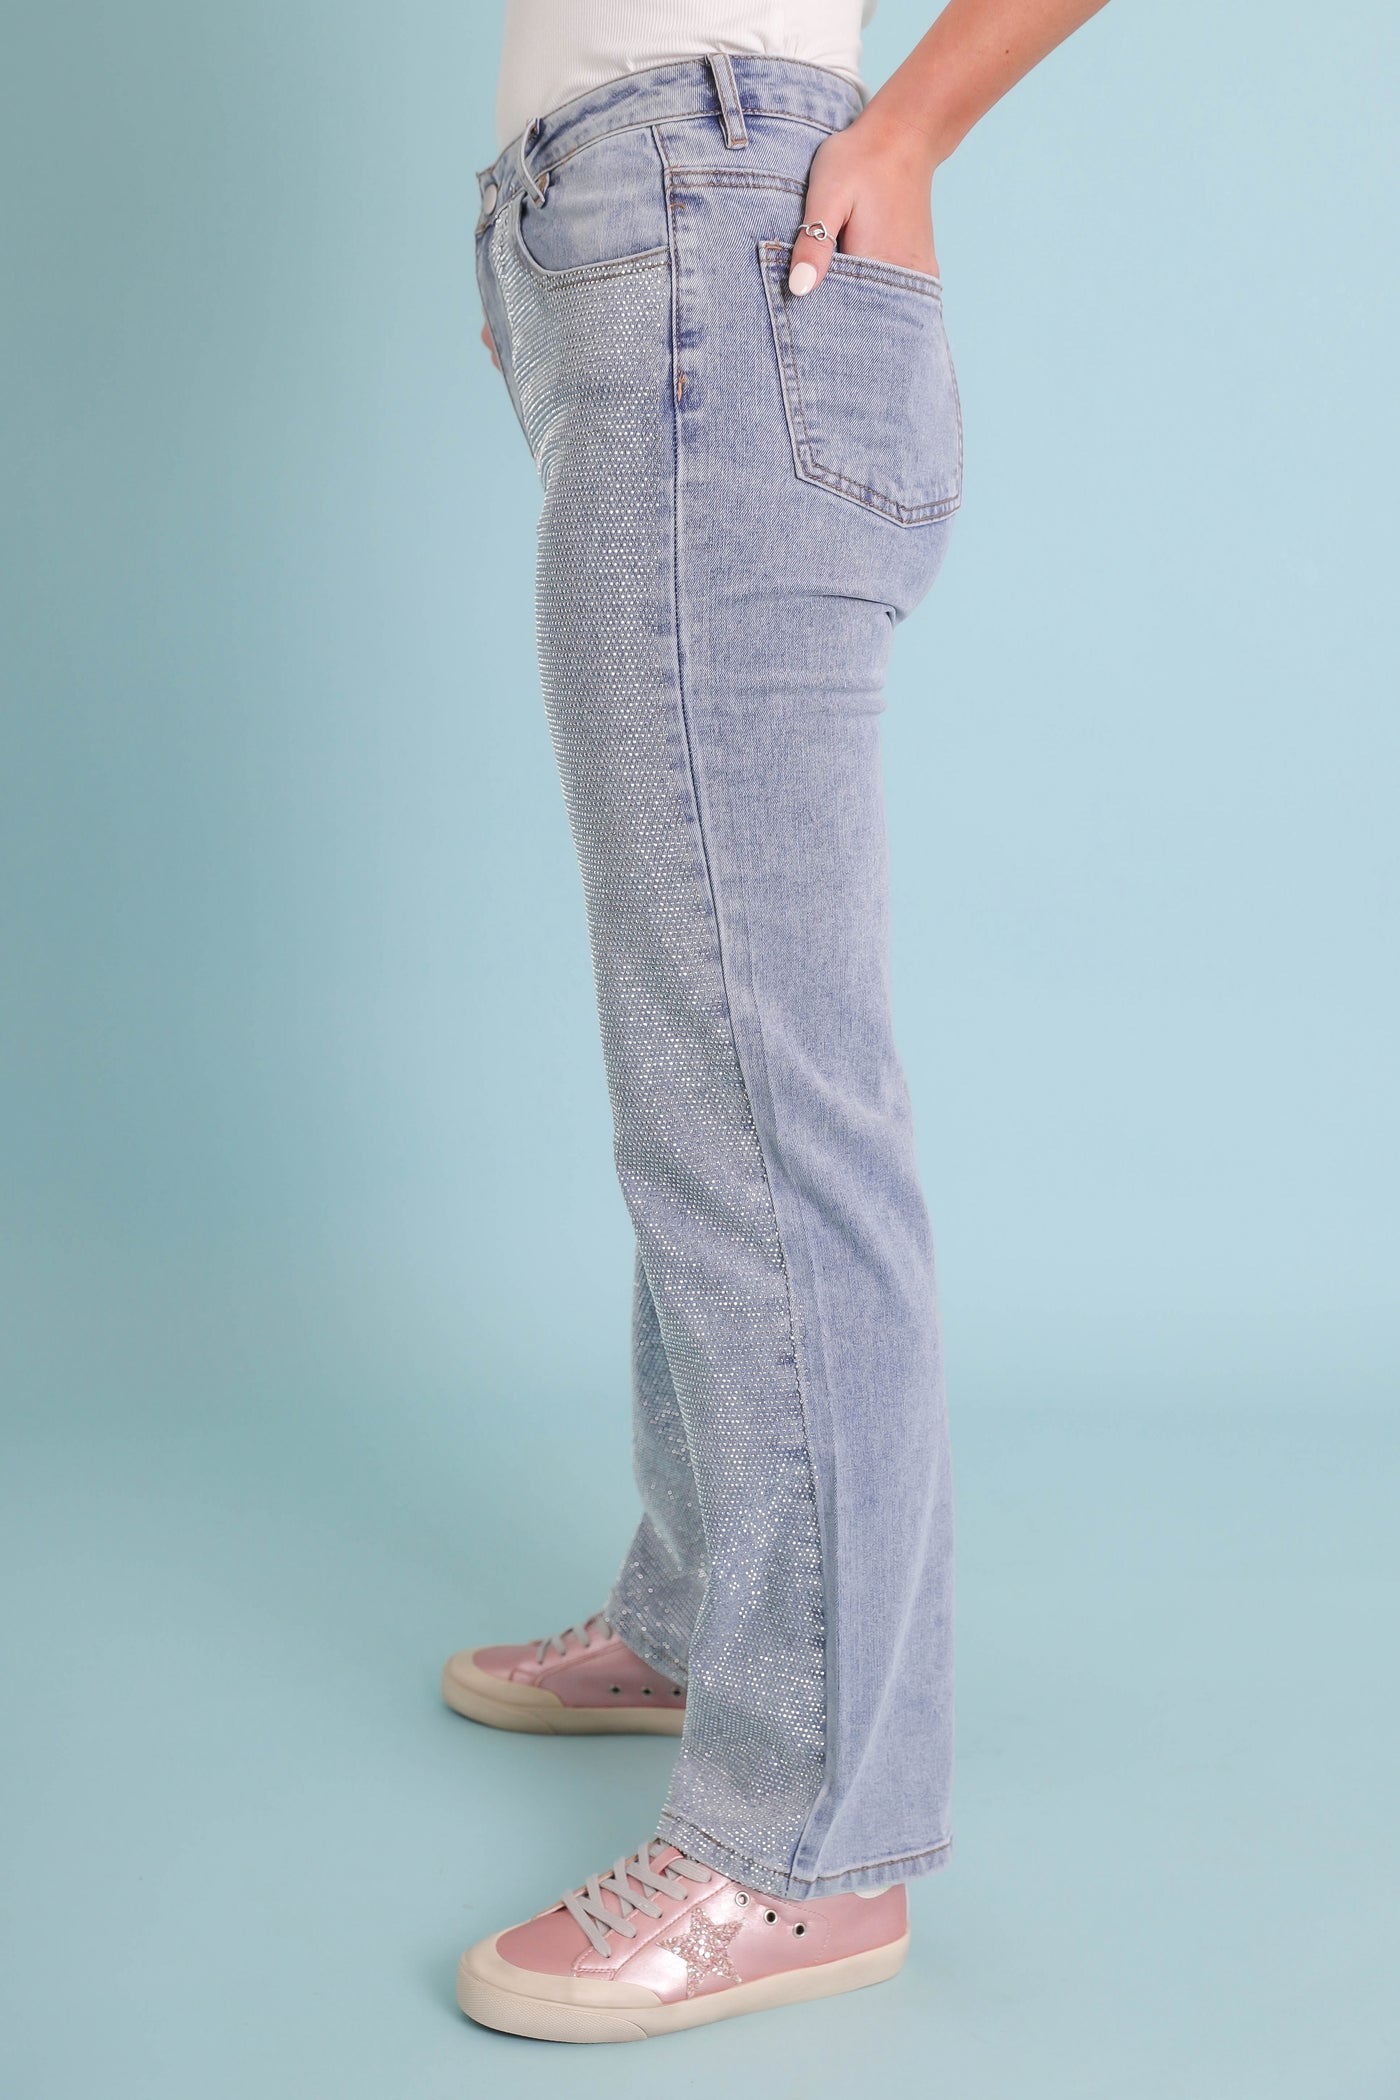 Light Wash Rhinestone Jeans- Women's Sequin Jeans- BlueB Jeans